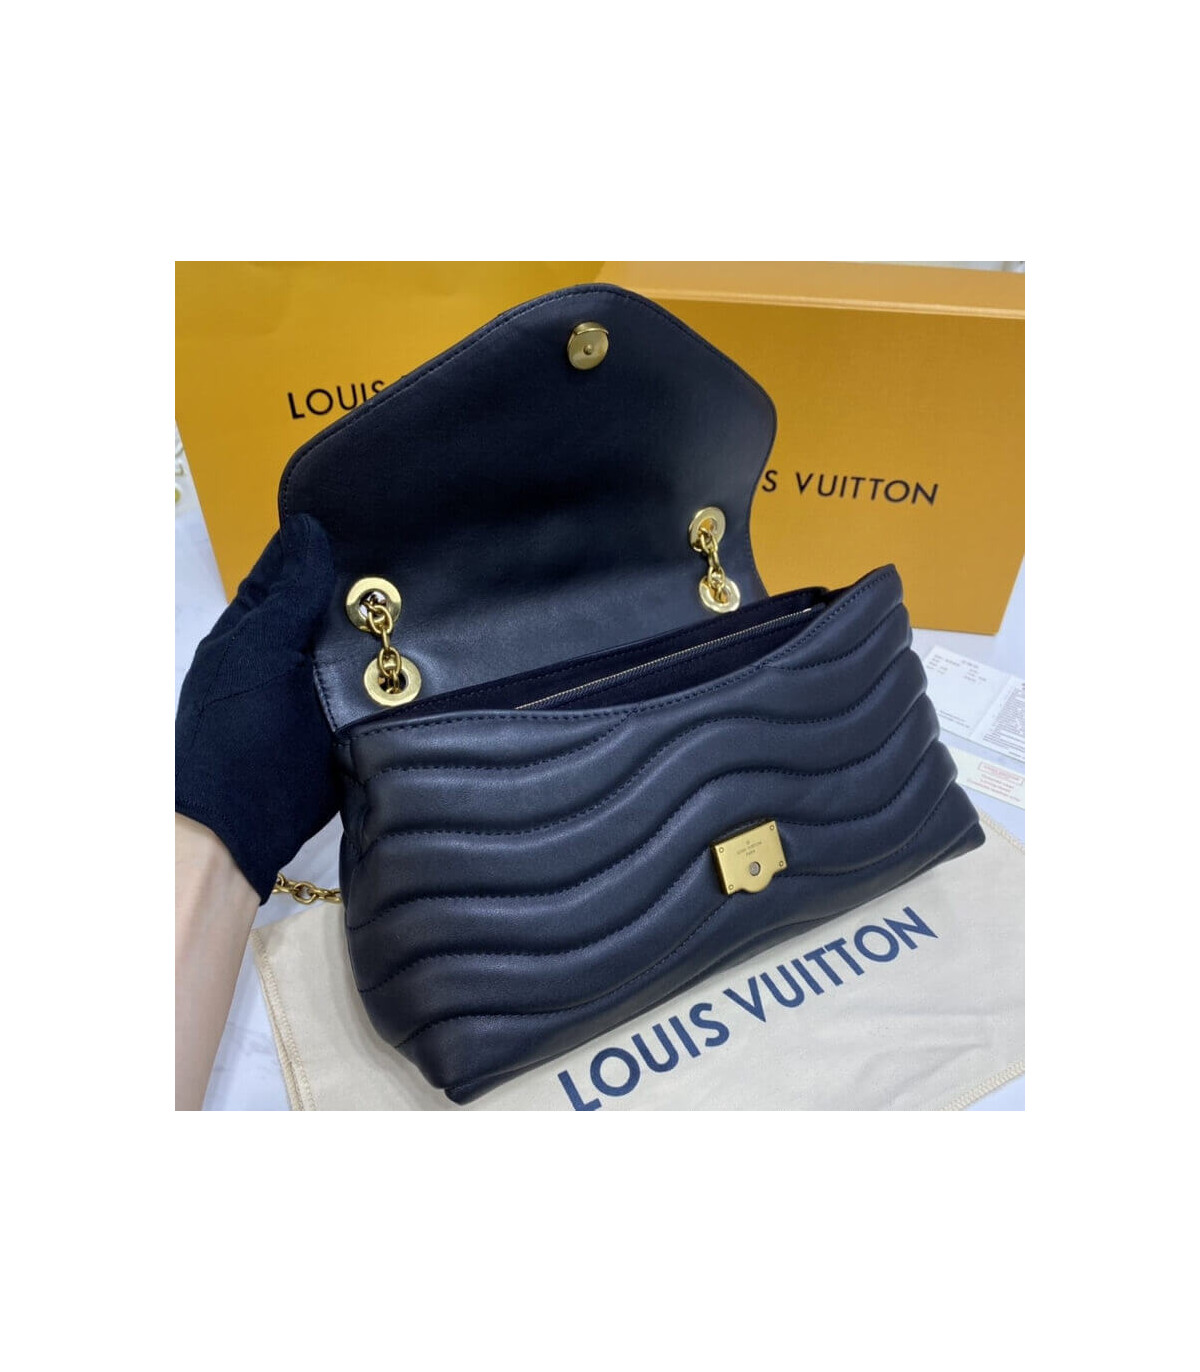 LV New Wave Chain Bag H24 in Black - Handbags M58552, L*V – ZAK BAGS ©️